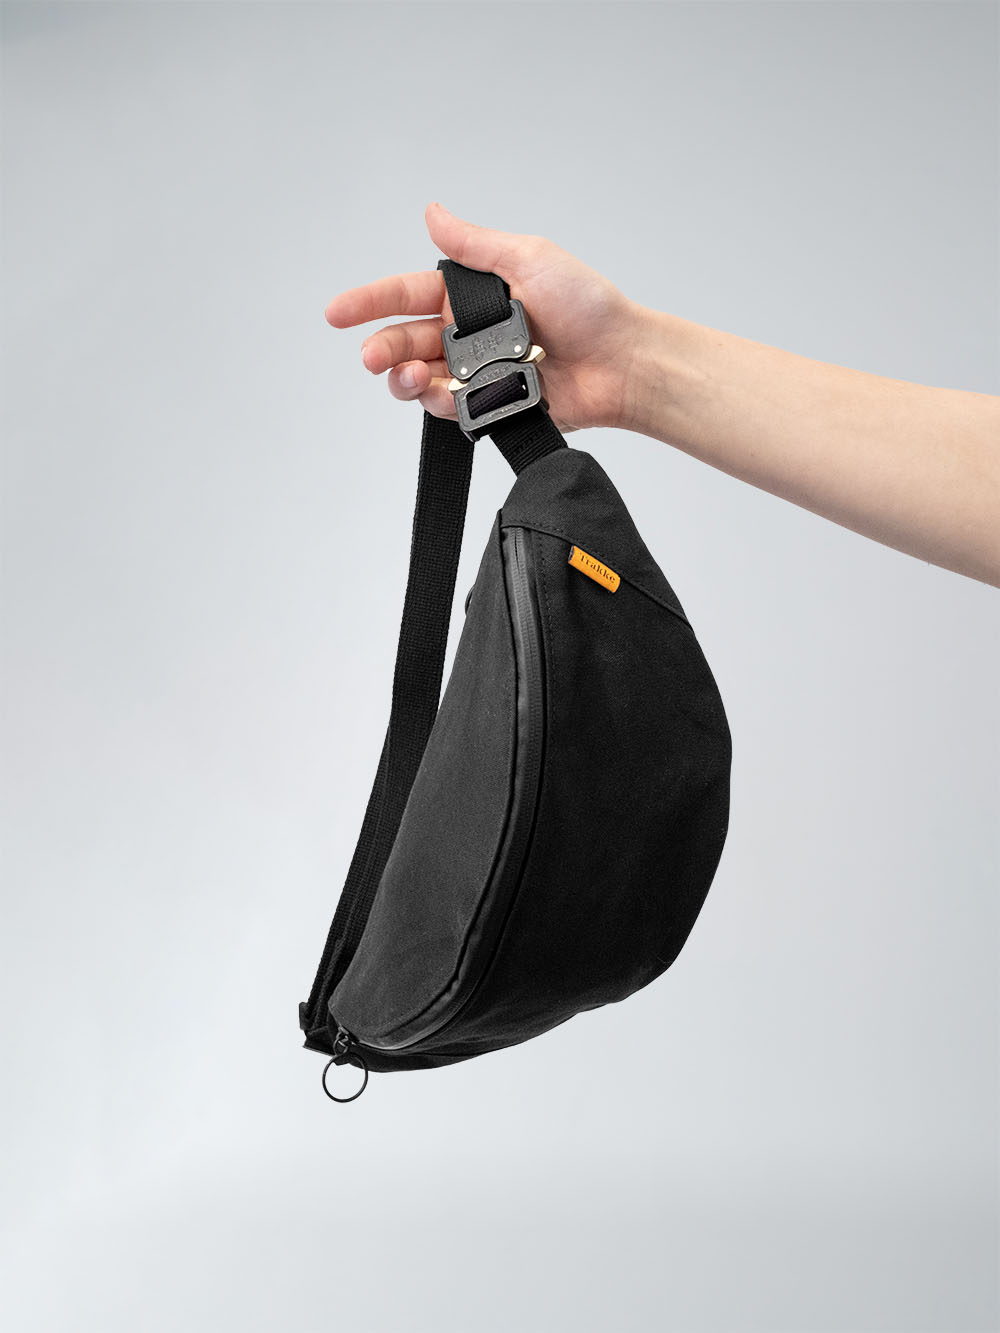 Bags for cyclists - Trakke Wee Lug Messenger Bag review